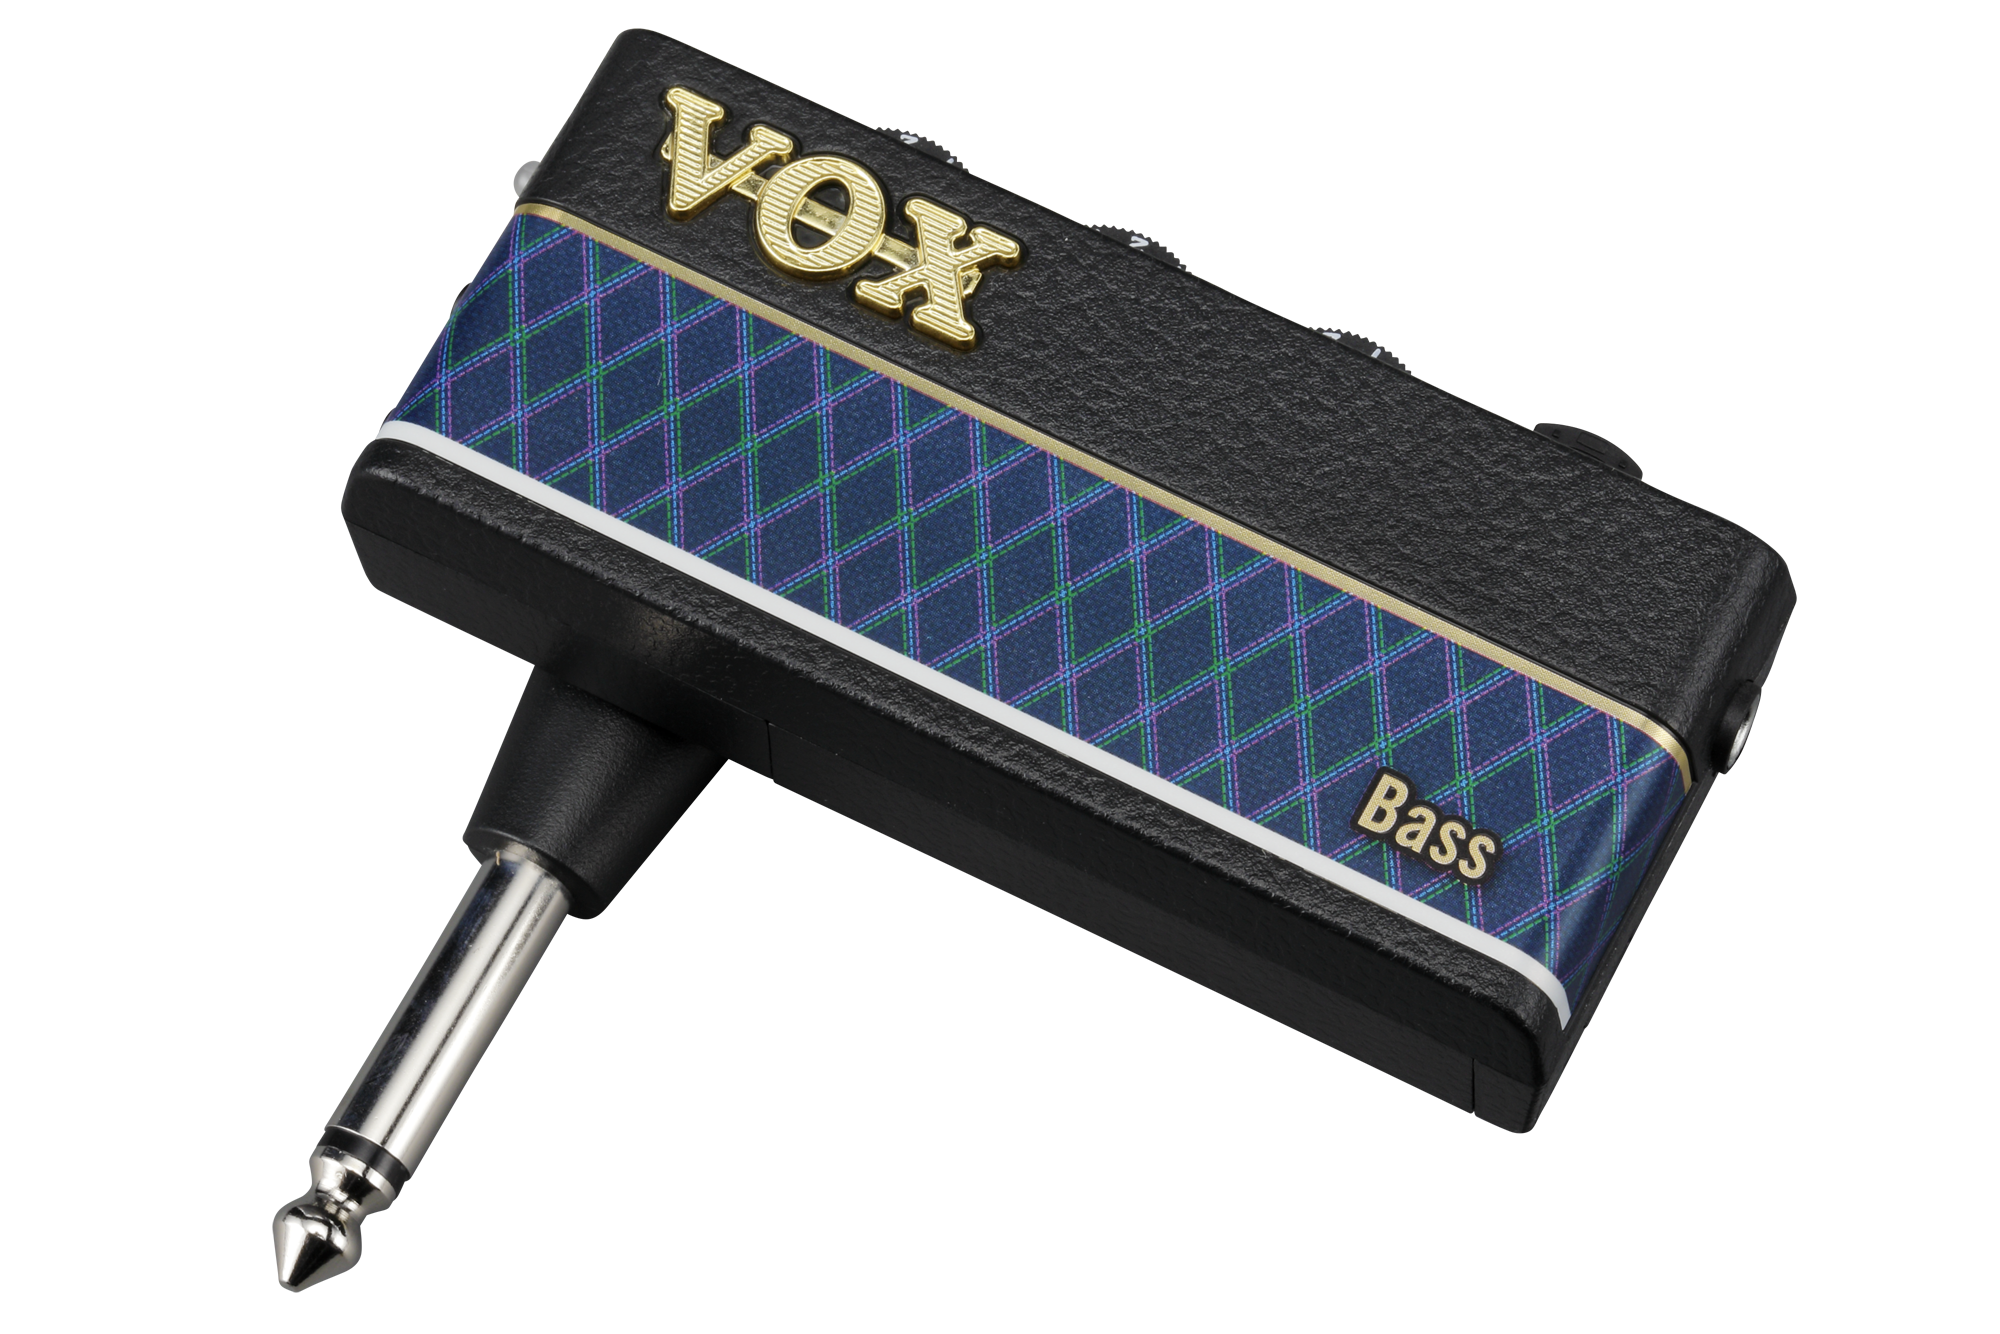 VOX amPlug 3 Bass